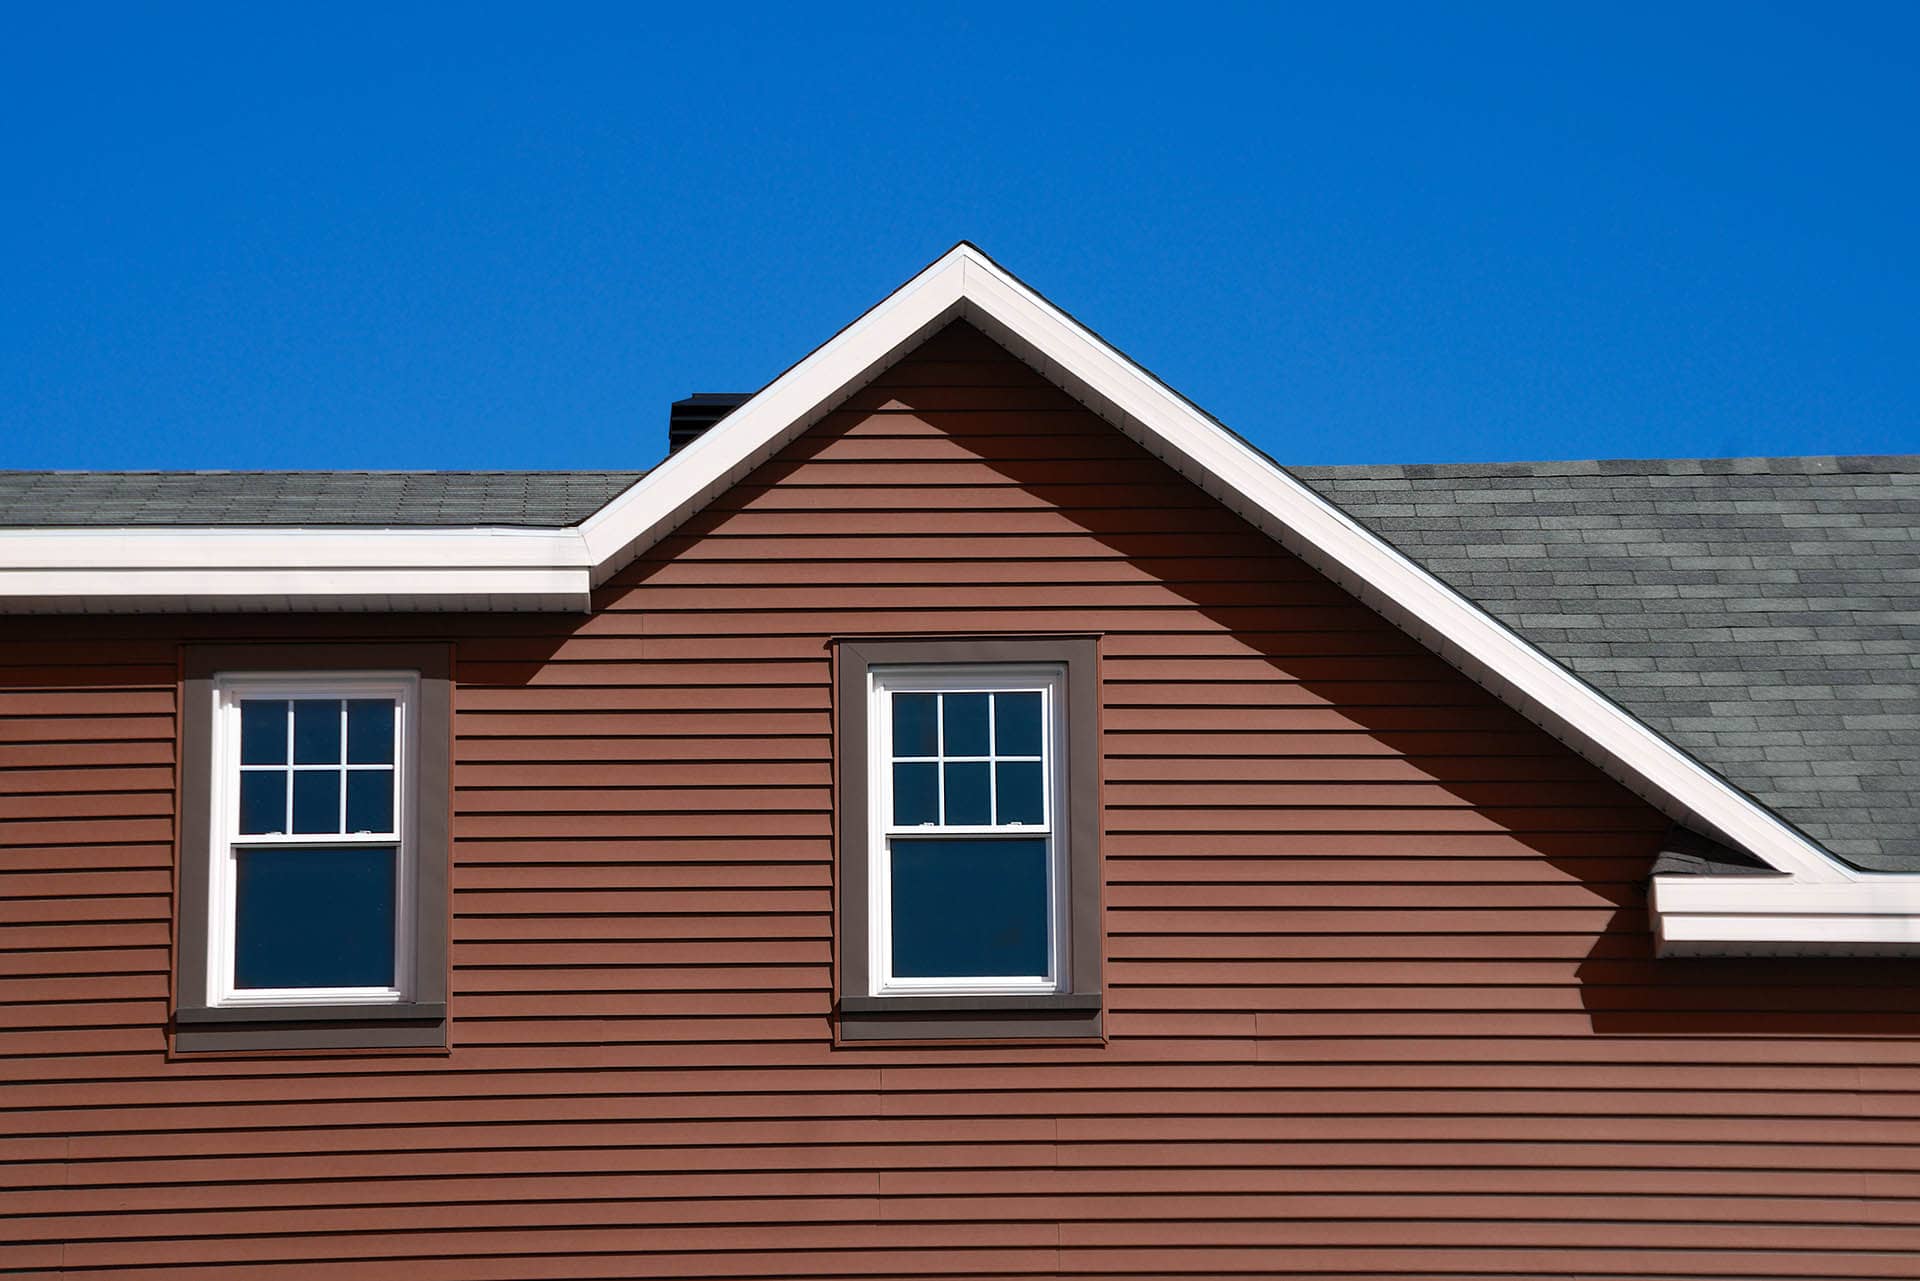 Composite Cladding on house with facade - composites alternatives